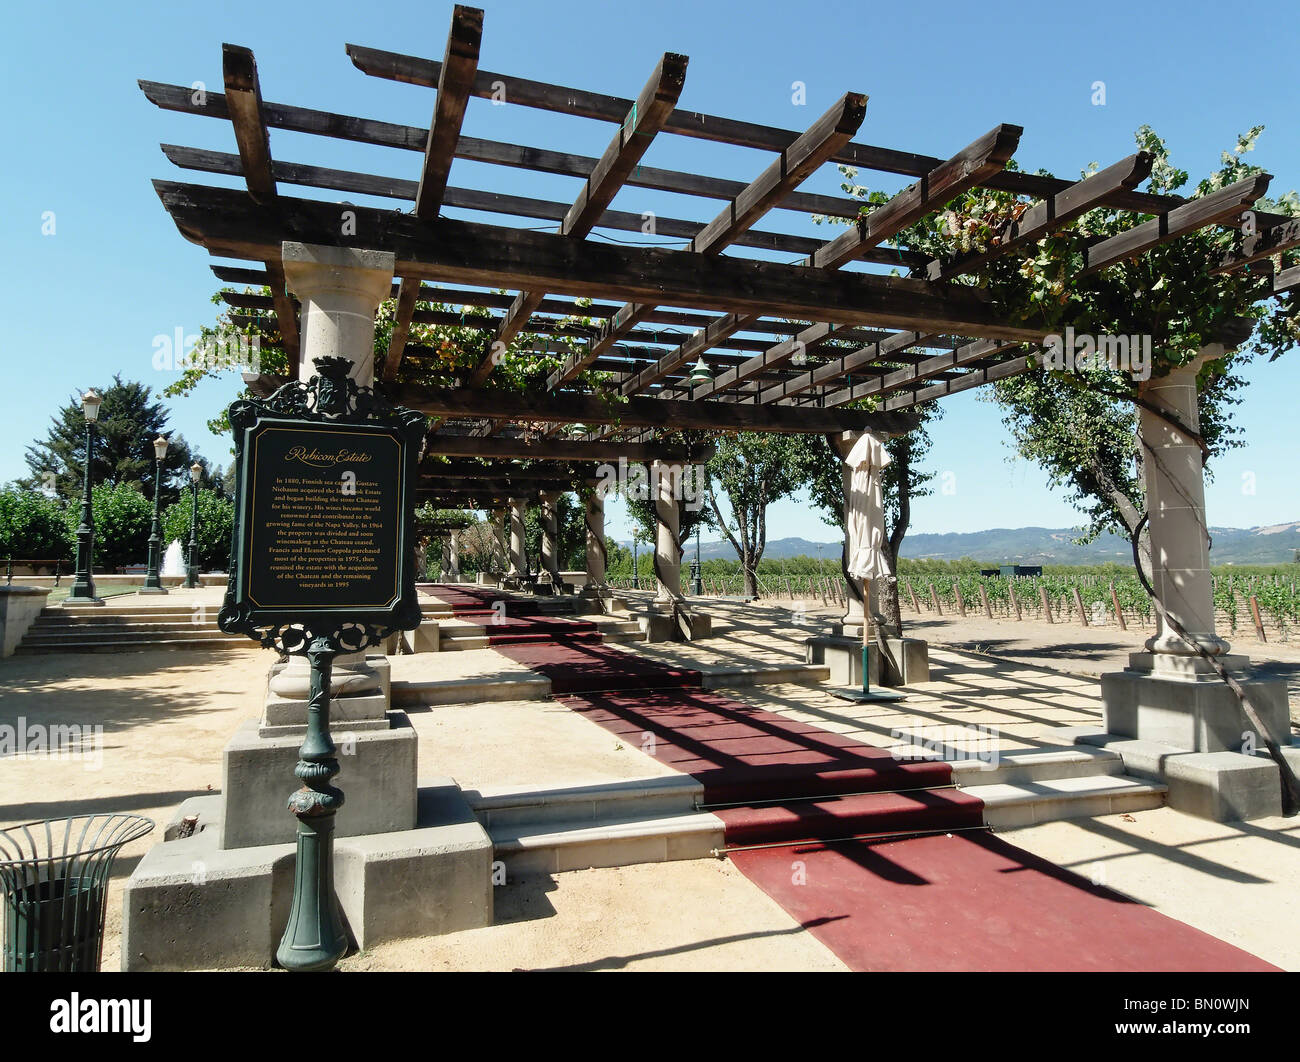 Grapevine on a Trellis, Rubicon Estate, Niebaum-Coppola Winery, Rutherford, Napa Valley, California Stock Photo